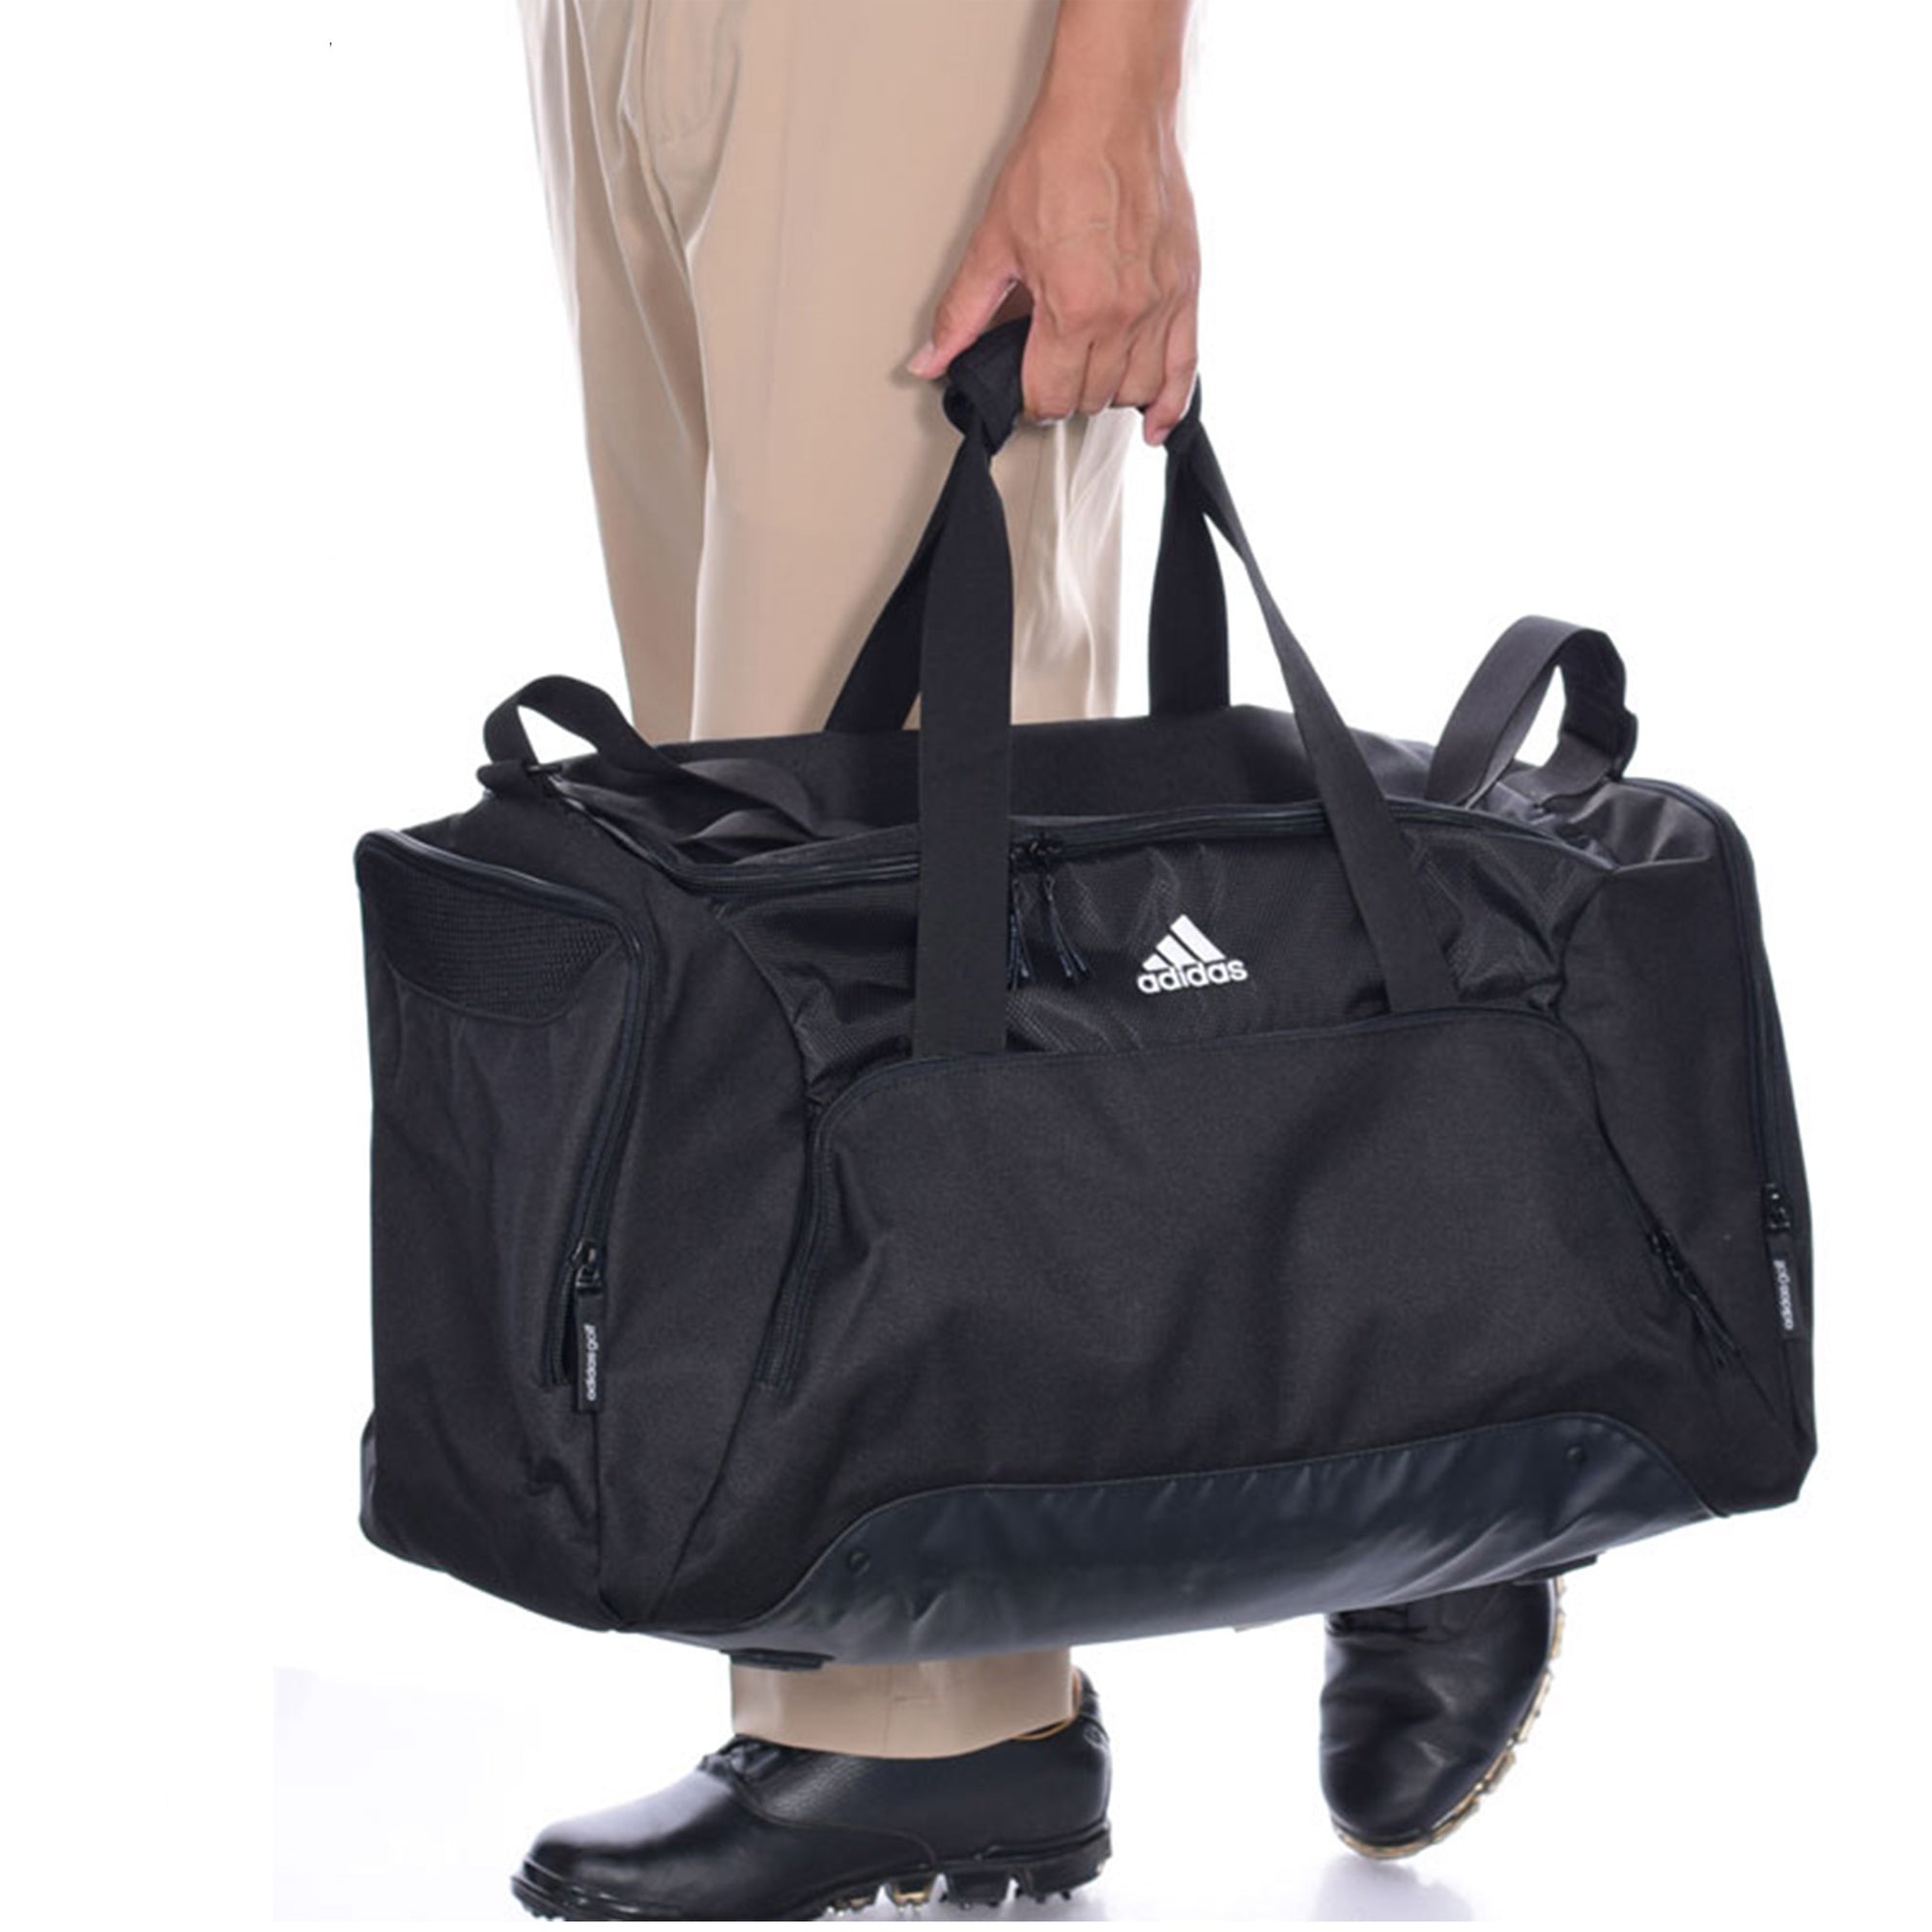 Adidas Medium Duffle Bag - Golf Anything US